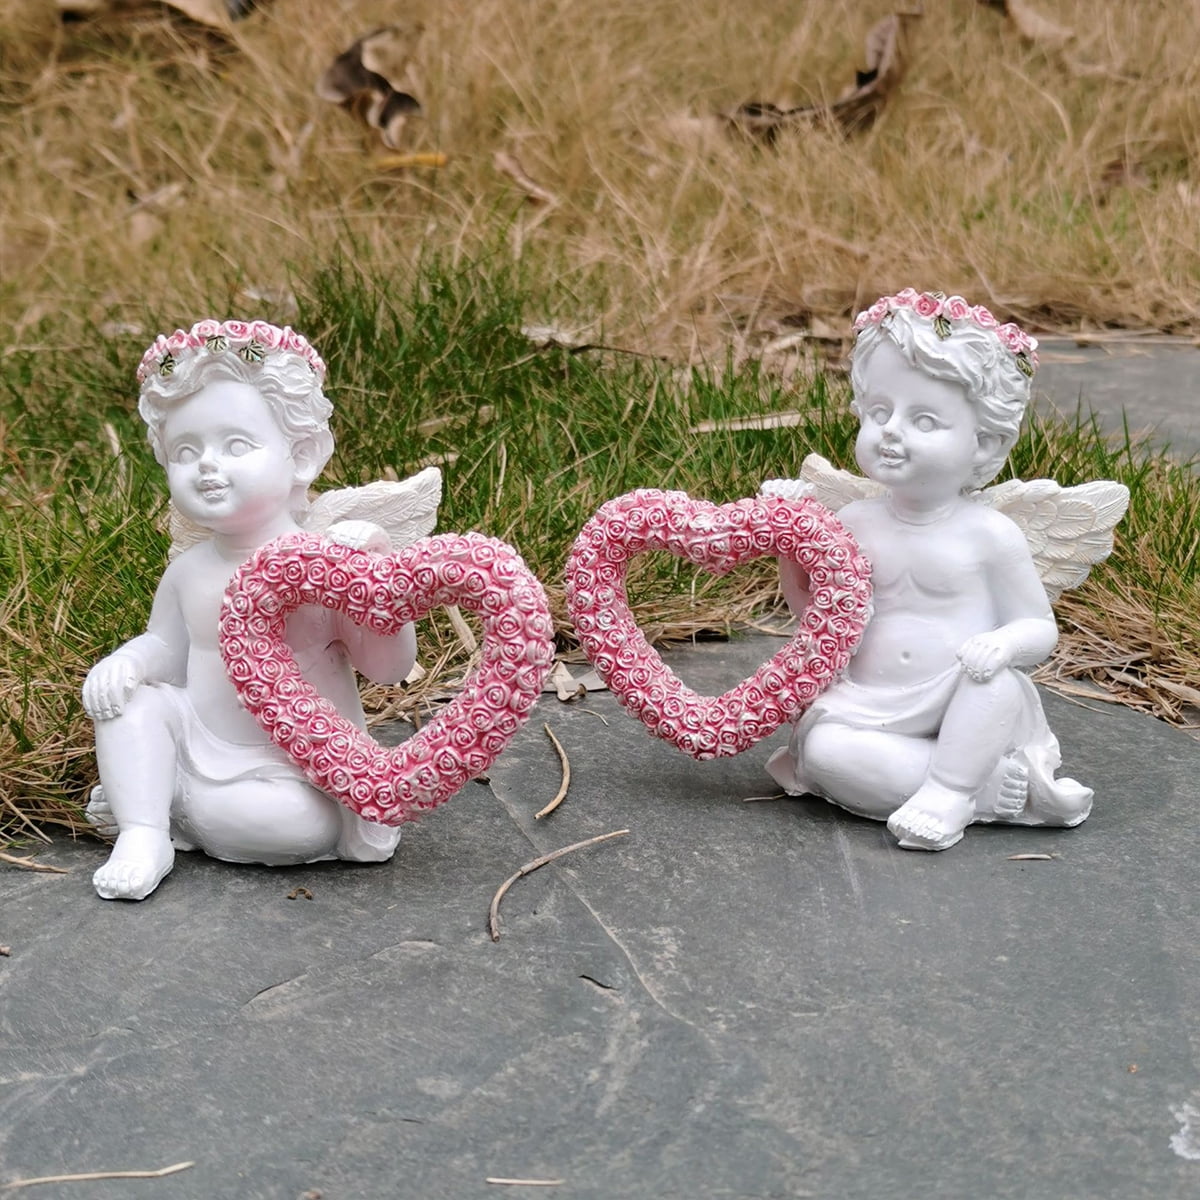 Cute Cherubs Angels Ornament Gift Love Heart Rose Figurine Statue Home Decor 